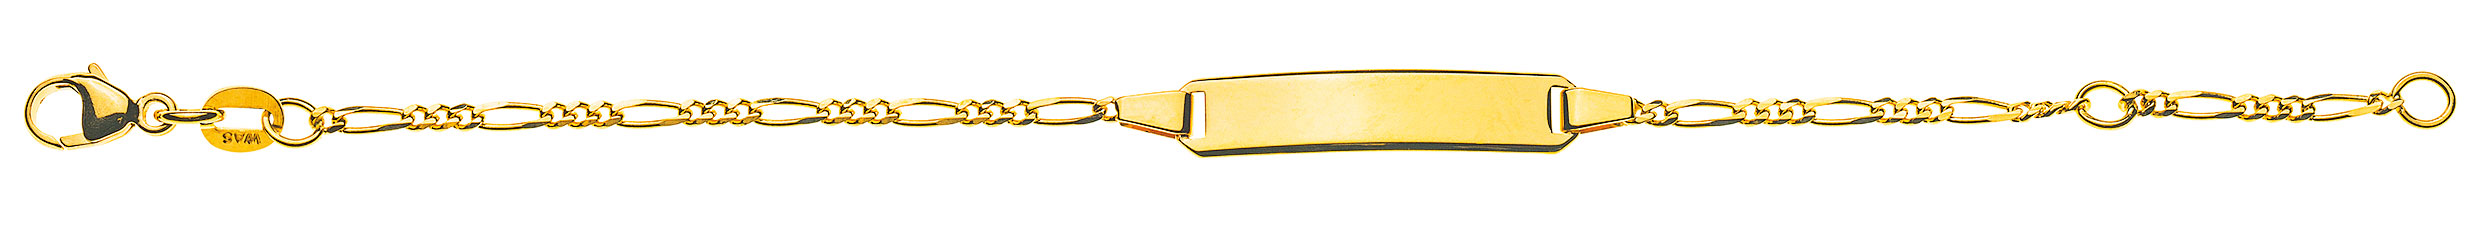 AURONOS Prestige ID-Bracelet en or jaune 18k Chaîne Figaro 18cm